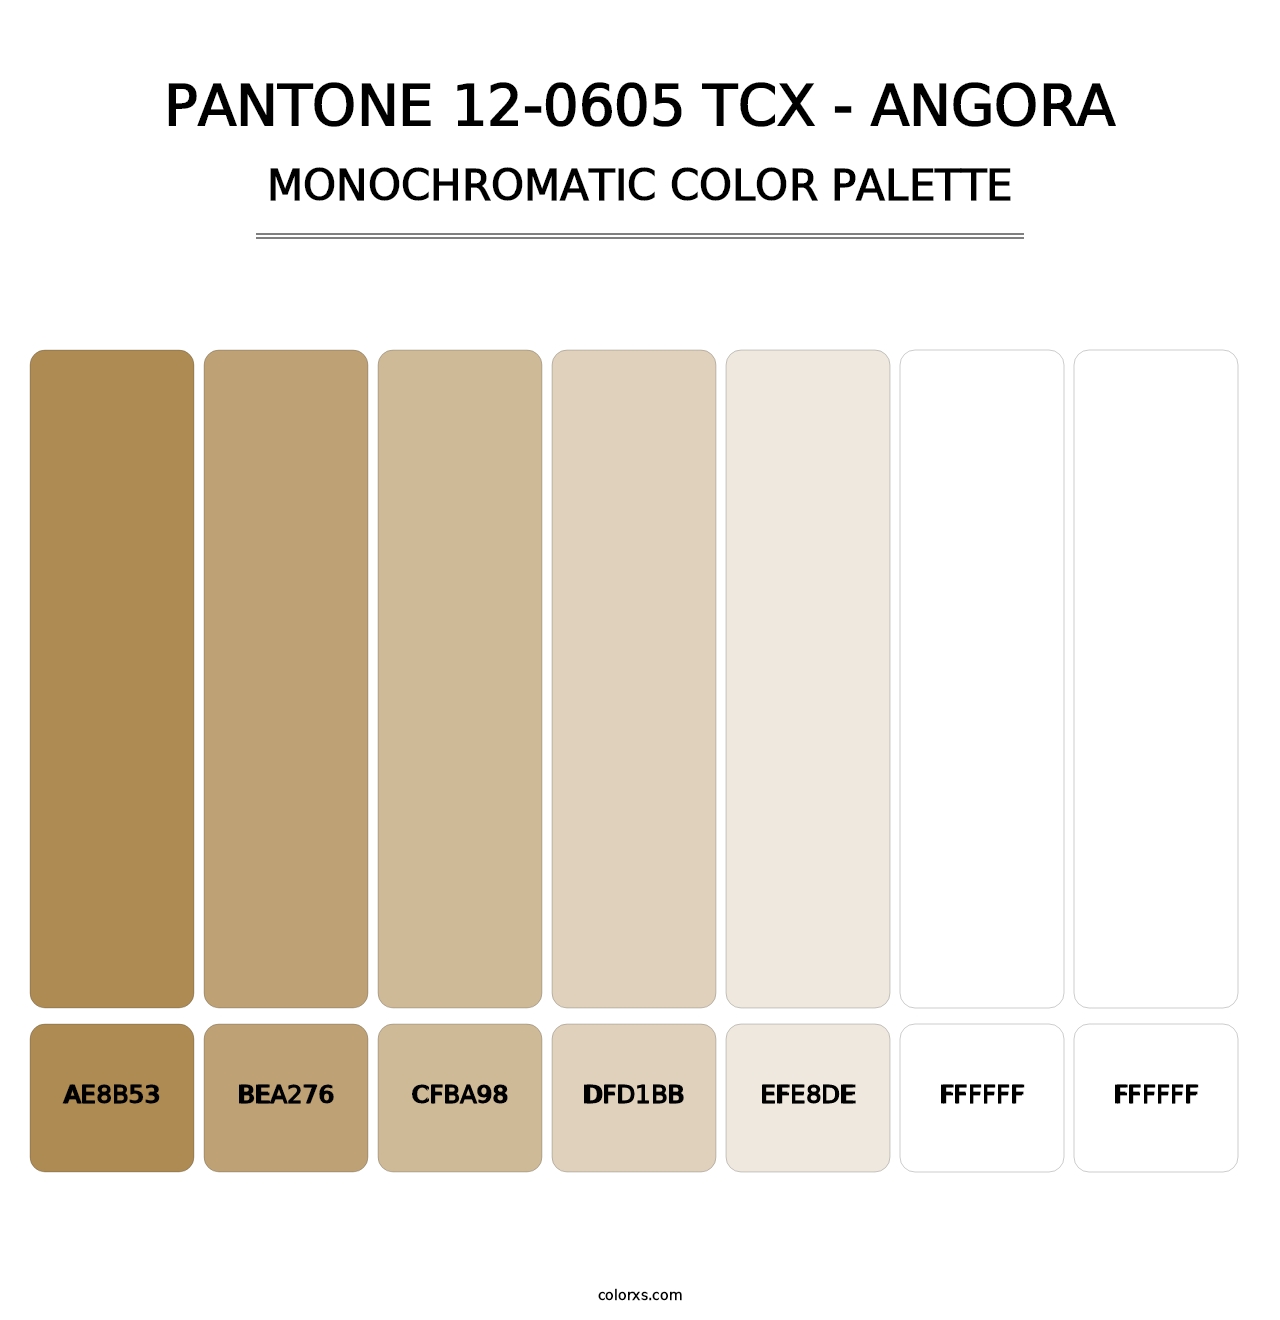 PANTONE 12-0605 TCX - Angora - Monochromatic Color Palette